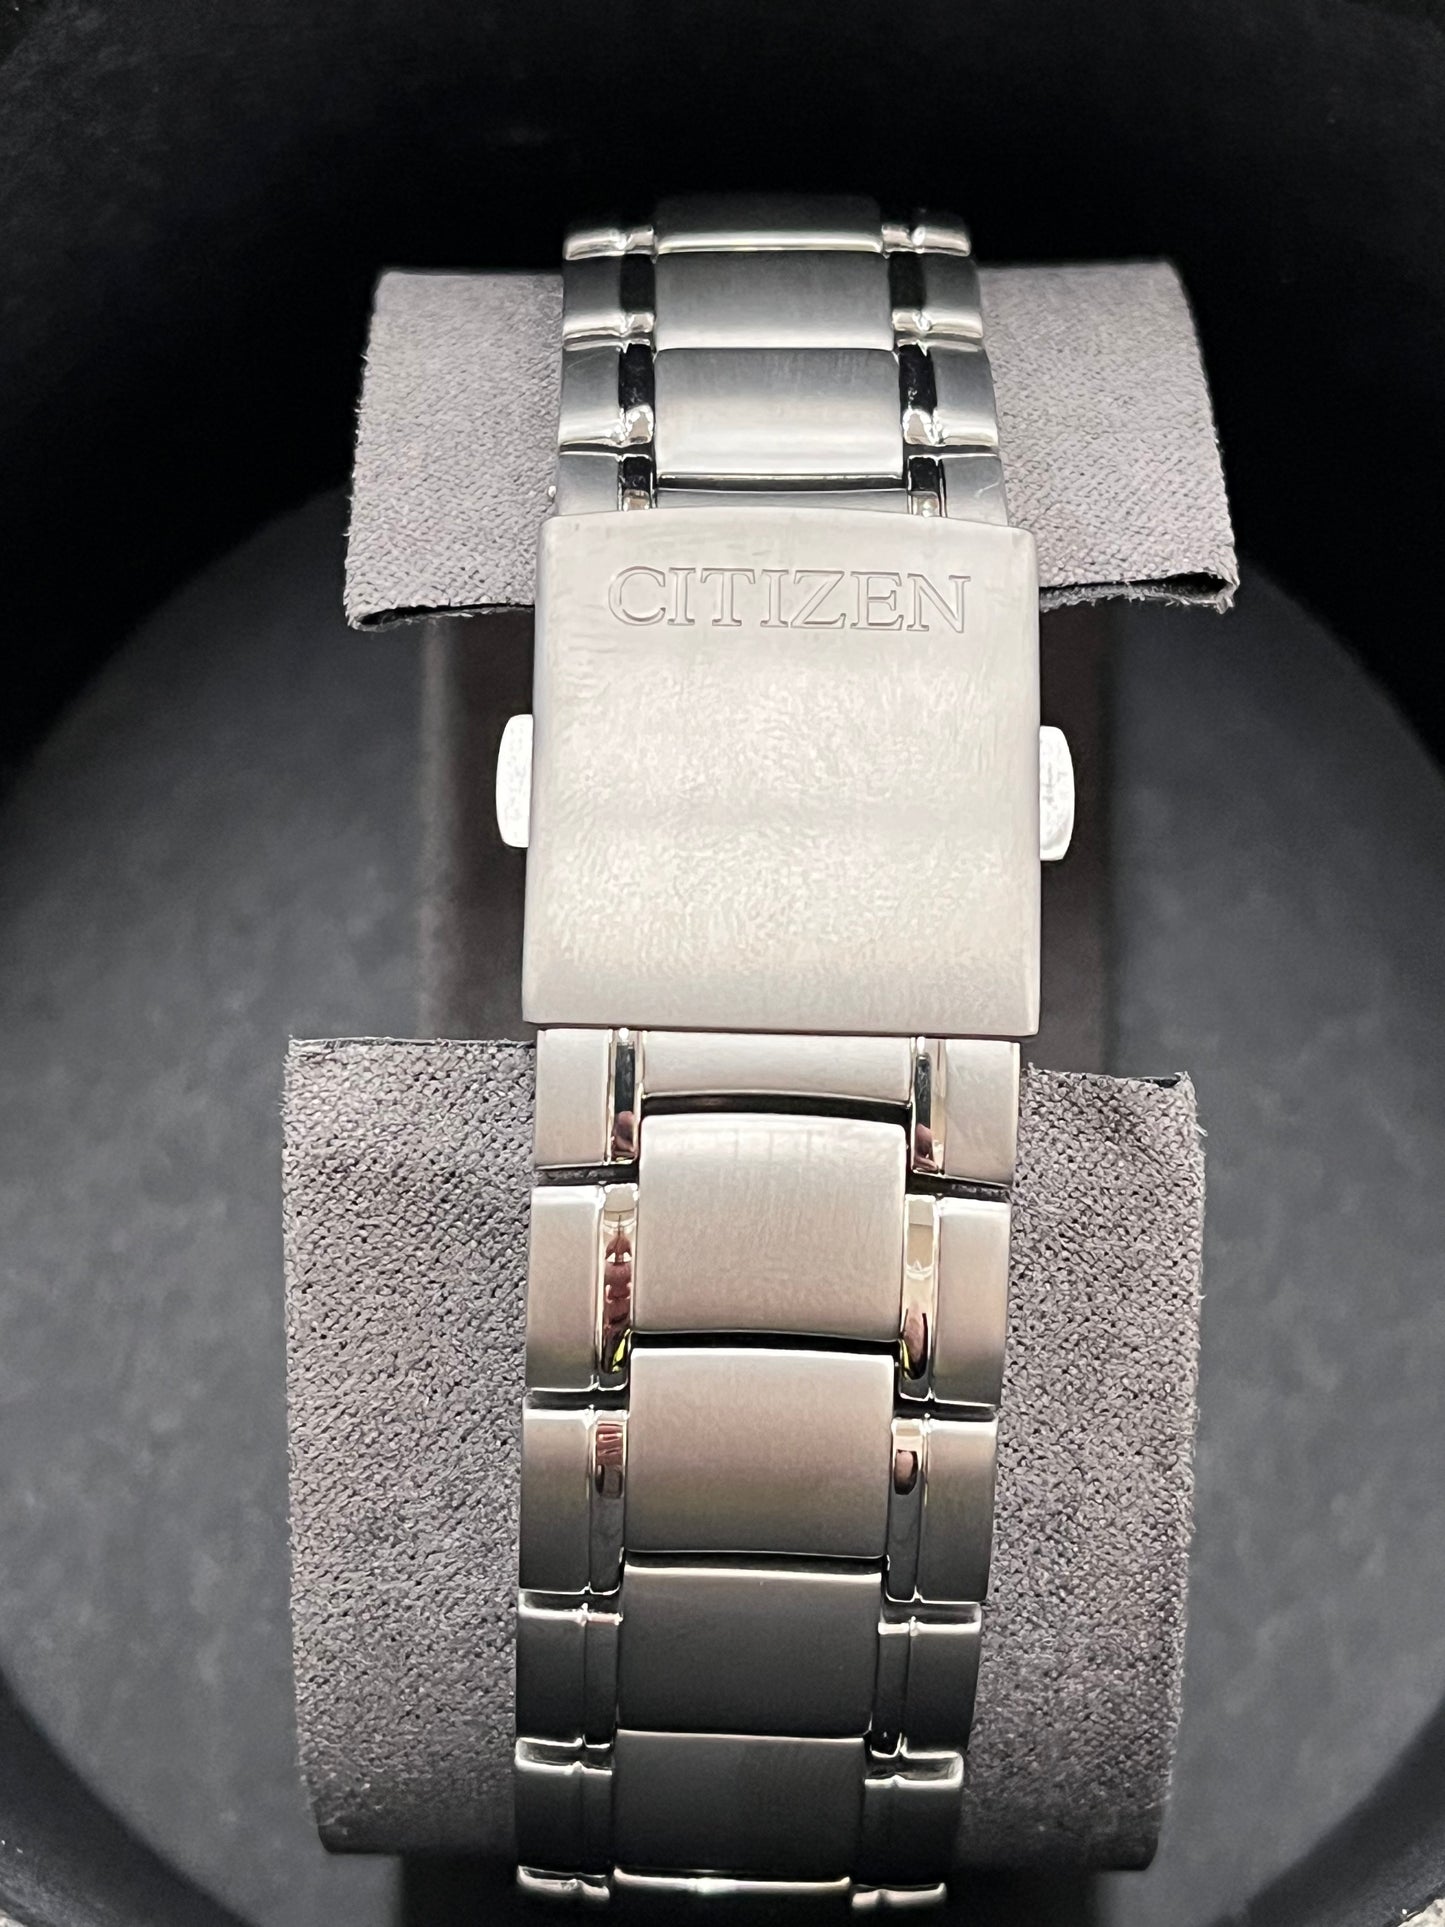 Citizen Men's Chronograph Eco-Drive Watch with a Titanium Band